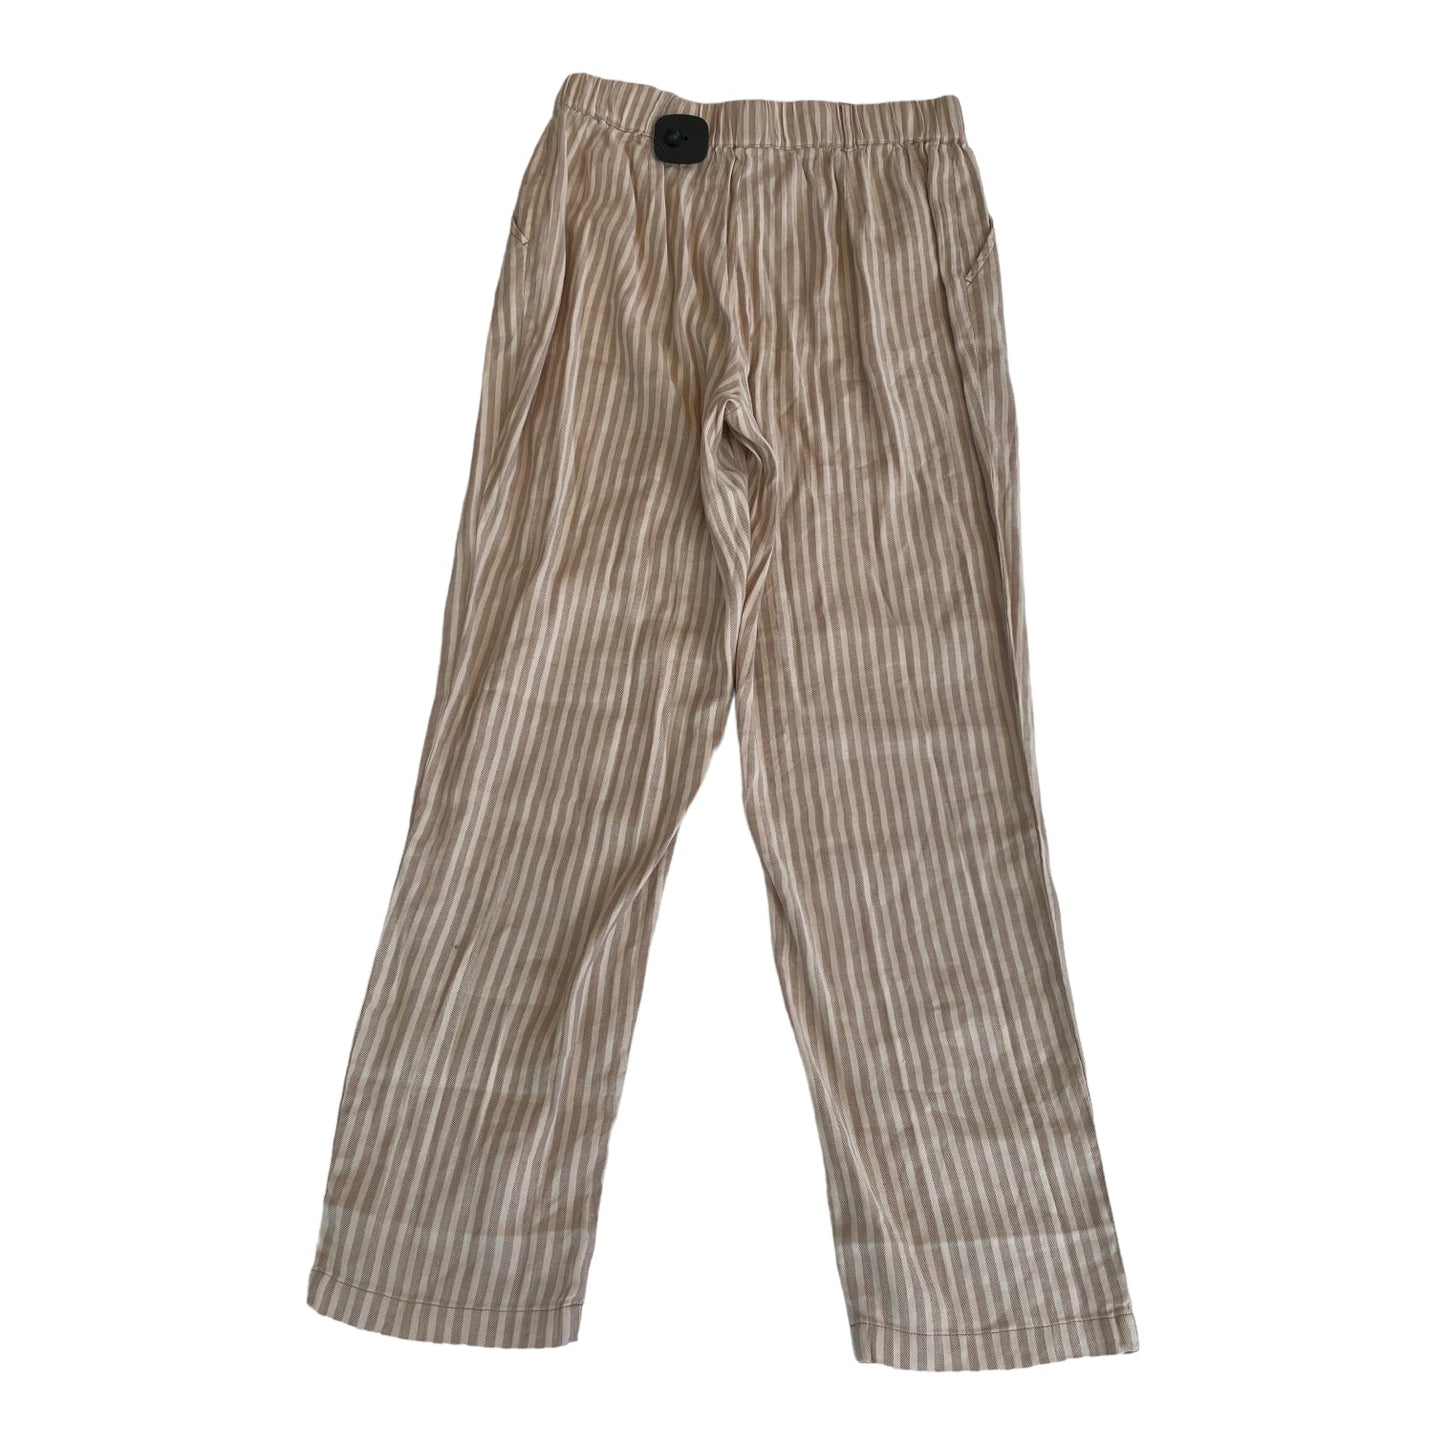 Striped Pattern Pants Cargo & Utility Nic + Zoe, Size 8